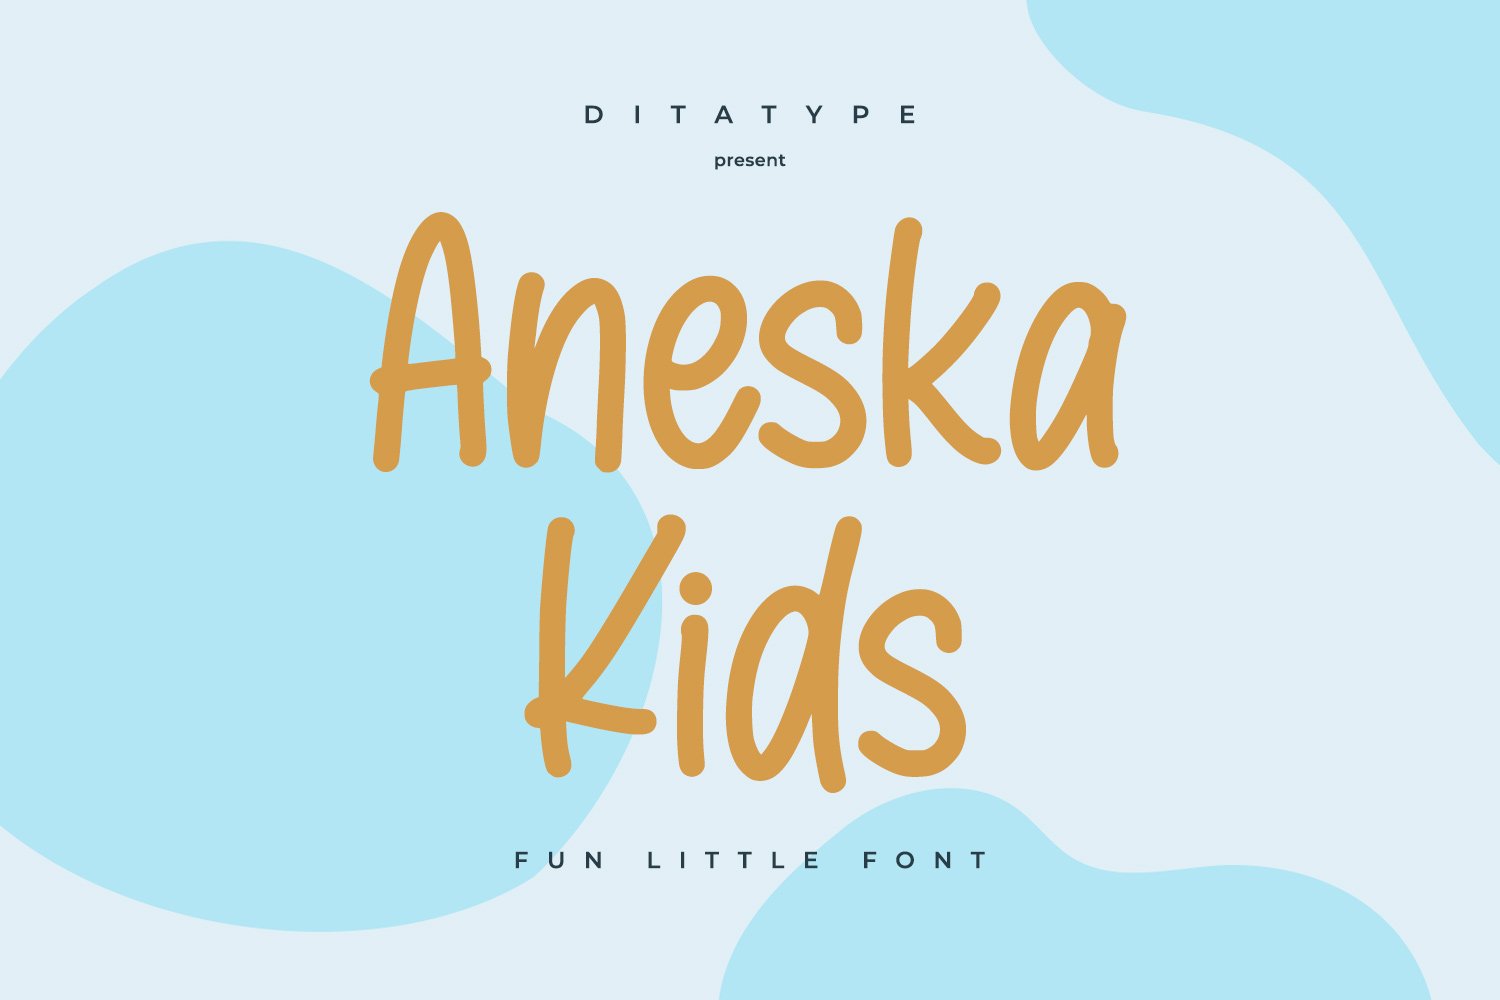 Aneska Kids cover image.